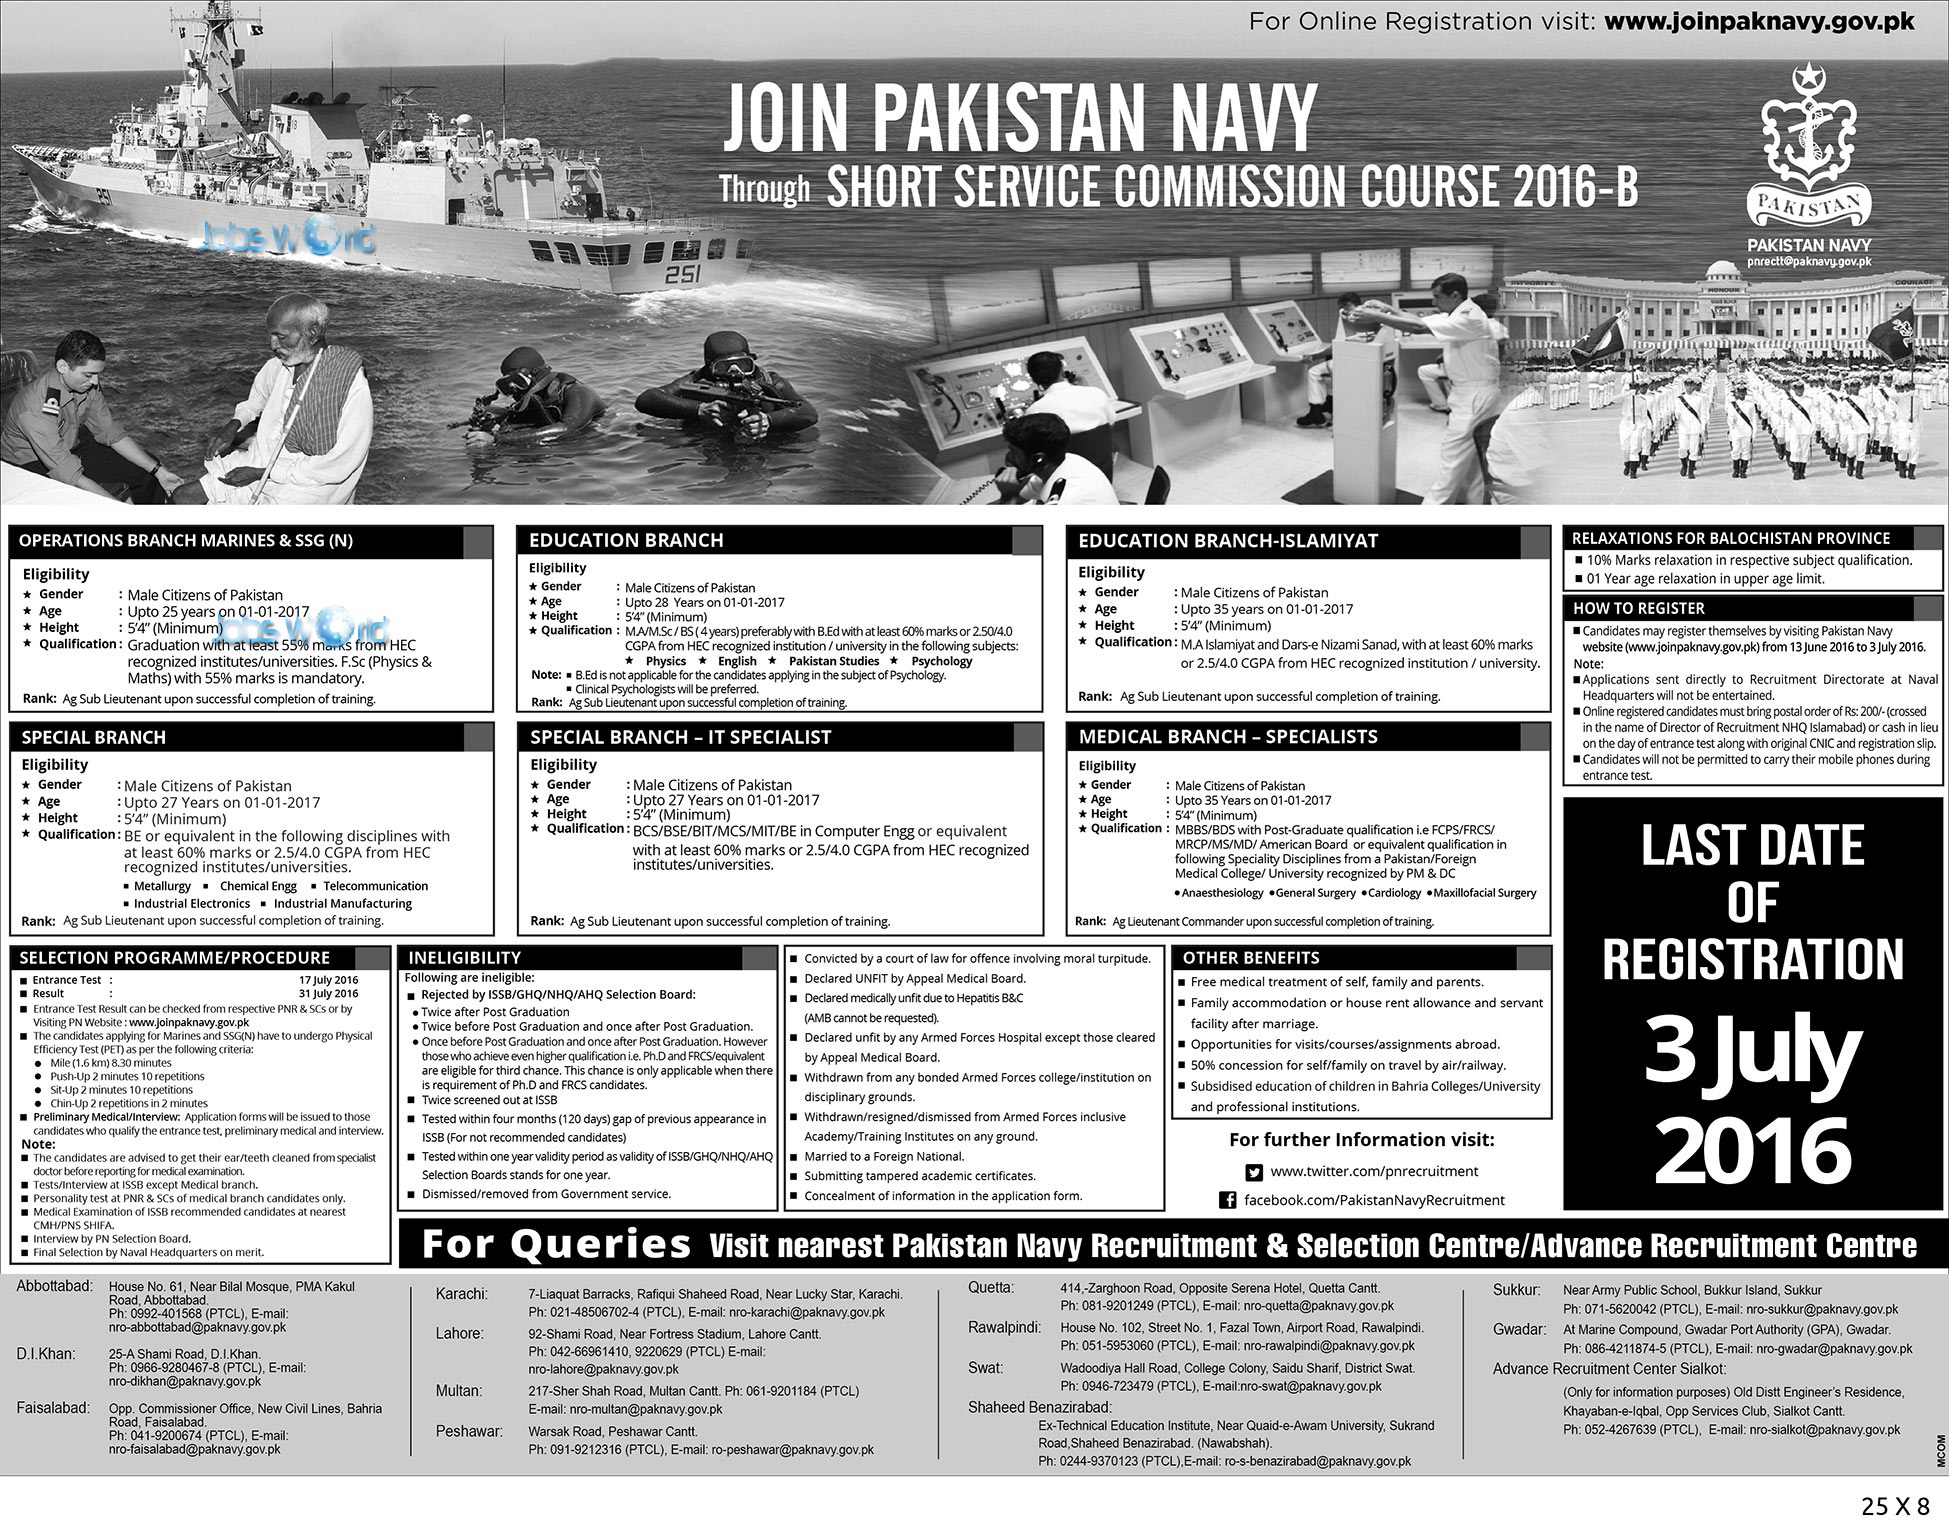 Pakistan-Navy-Short-Service-Commission-2016-B-Online-Registration.jpg